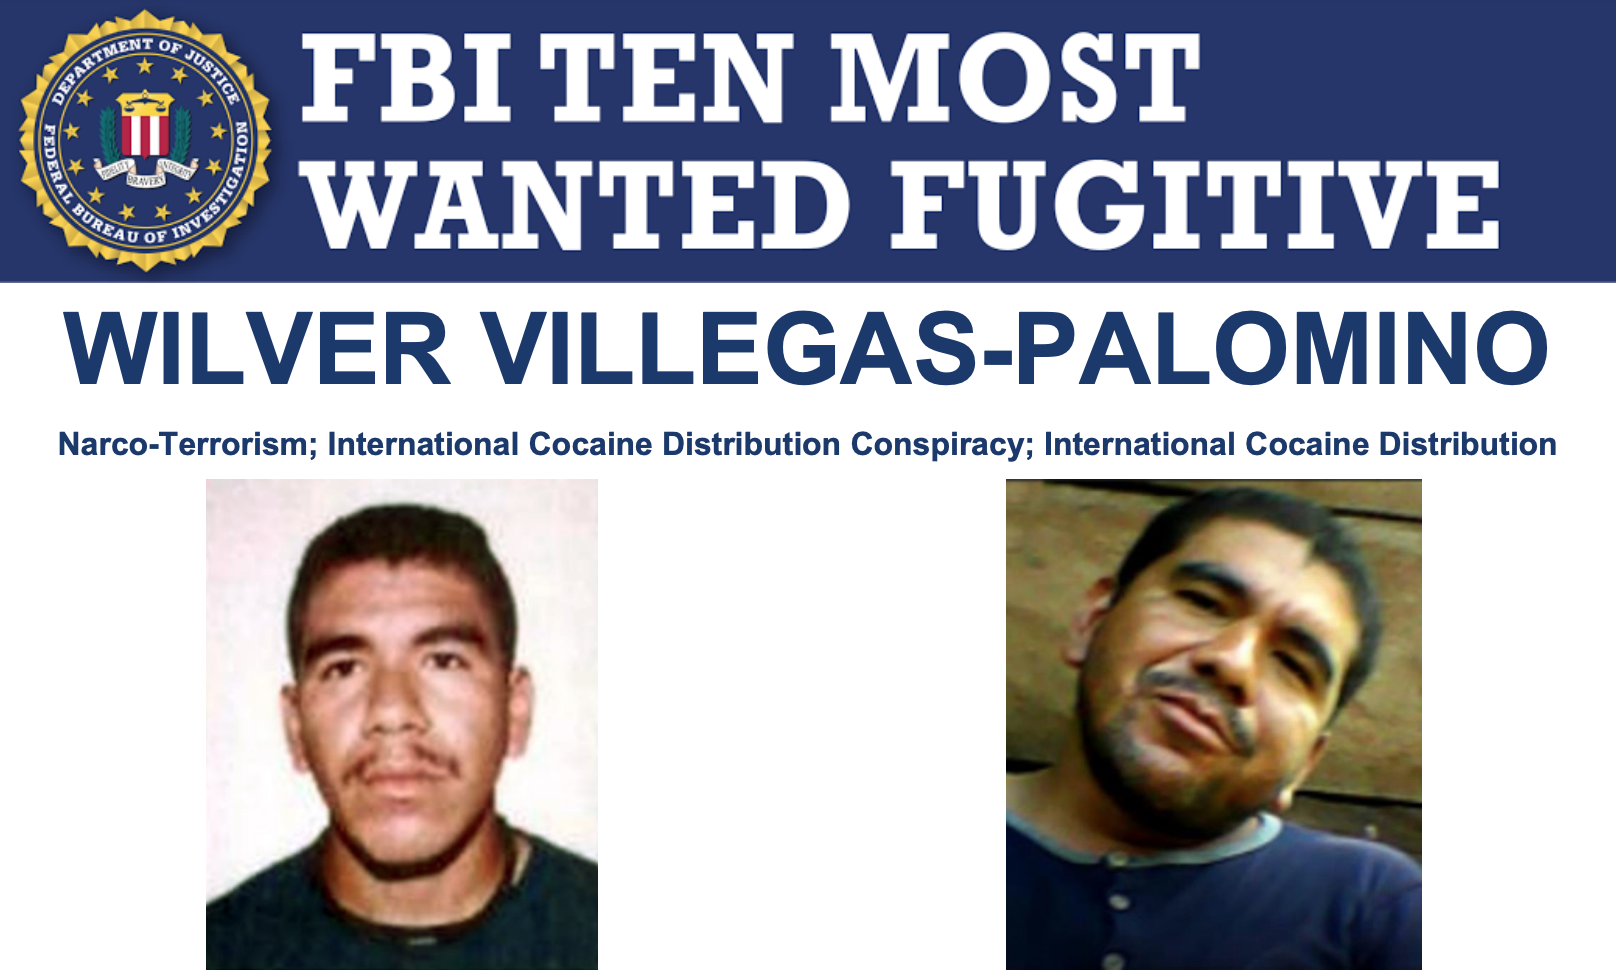 Houston Fugitive Placed on FBI’s Ten Most Wanted Fugitives List